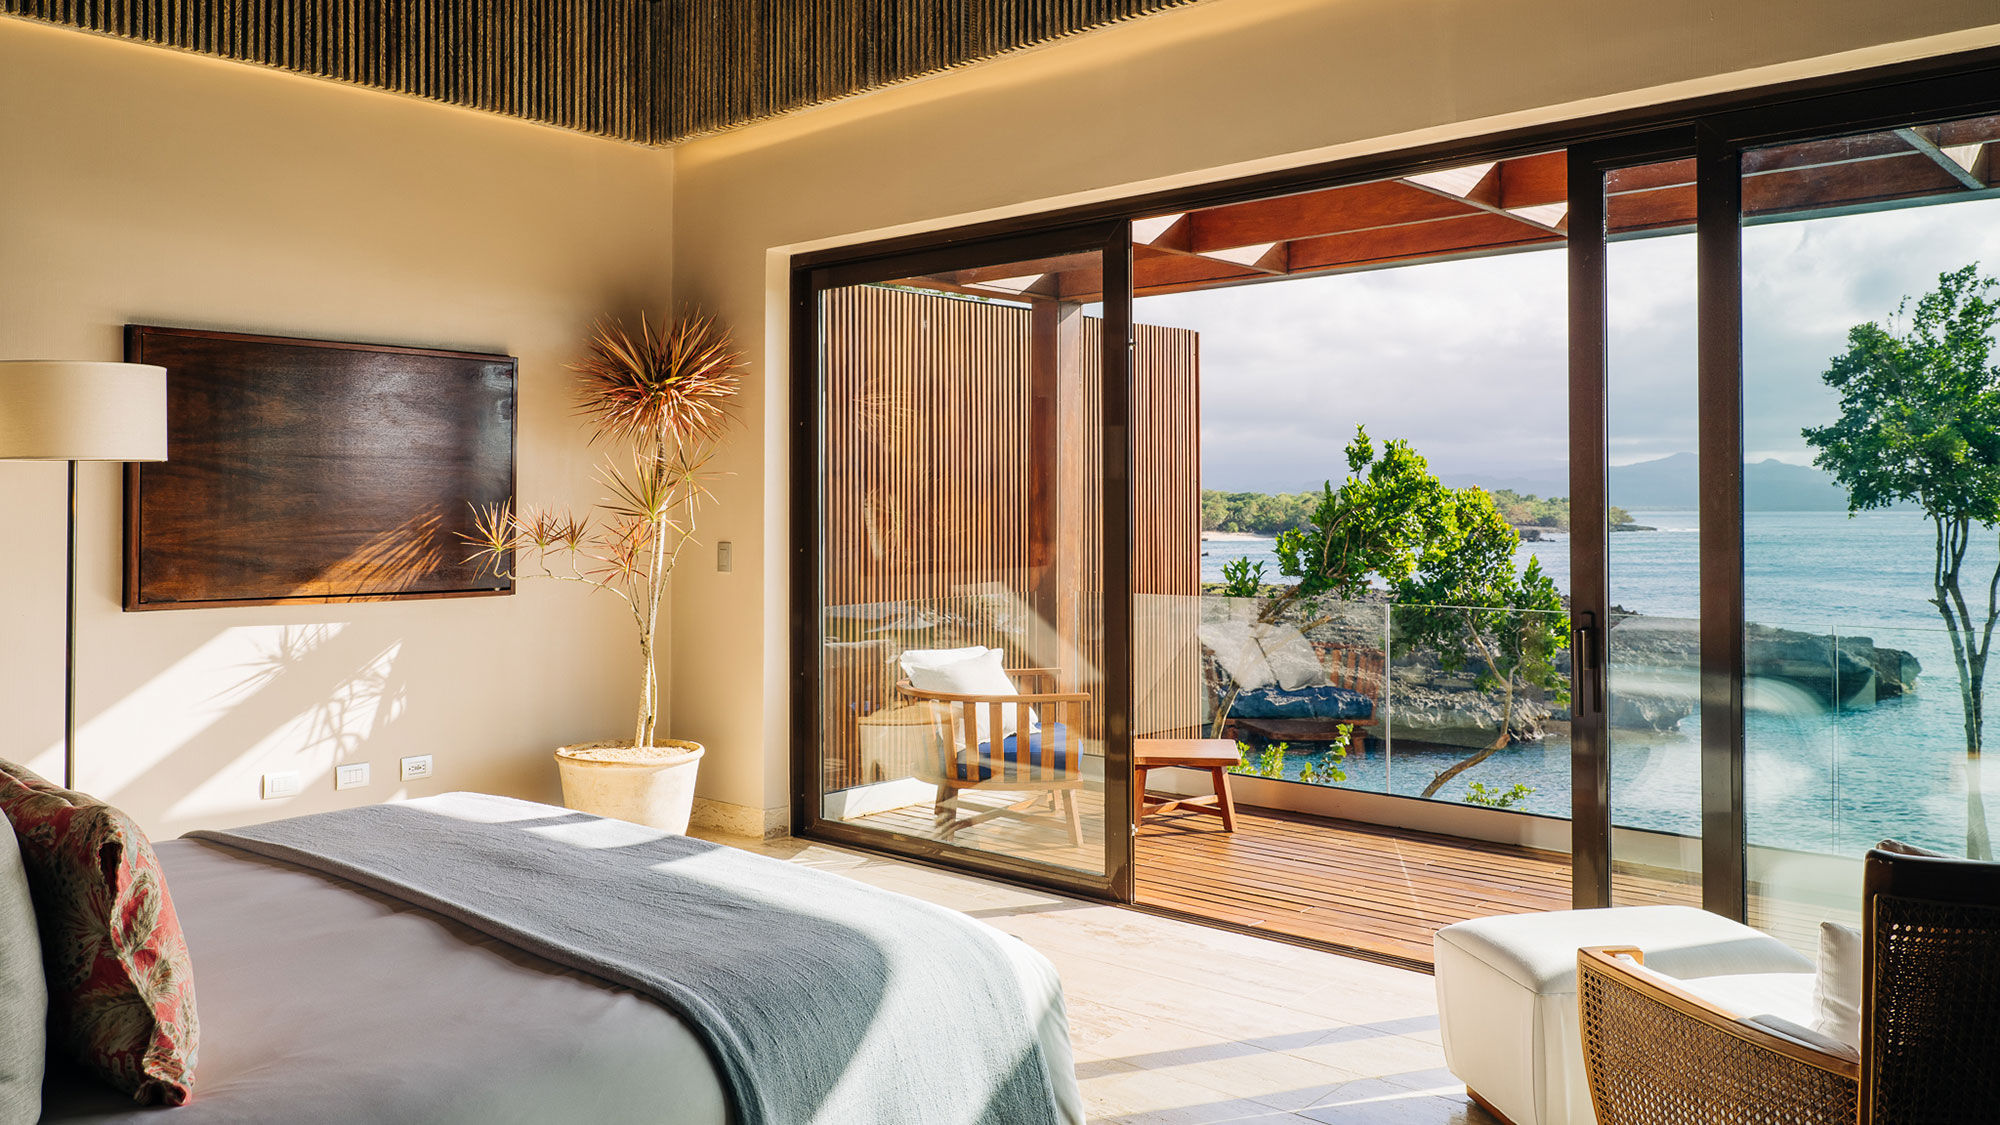 Ani offers luxury villas in the Caribbean, Thailand and Sri Lanka